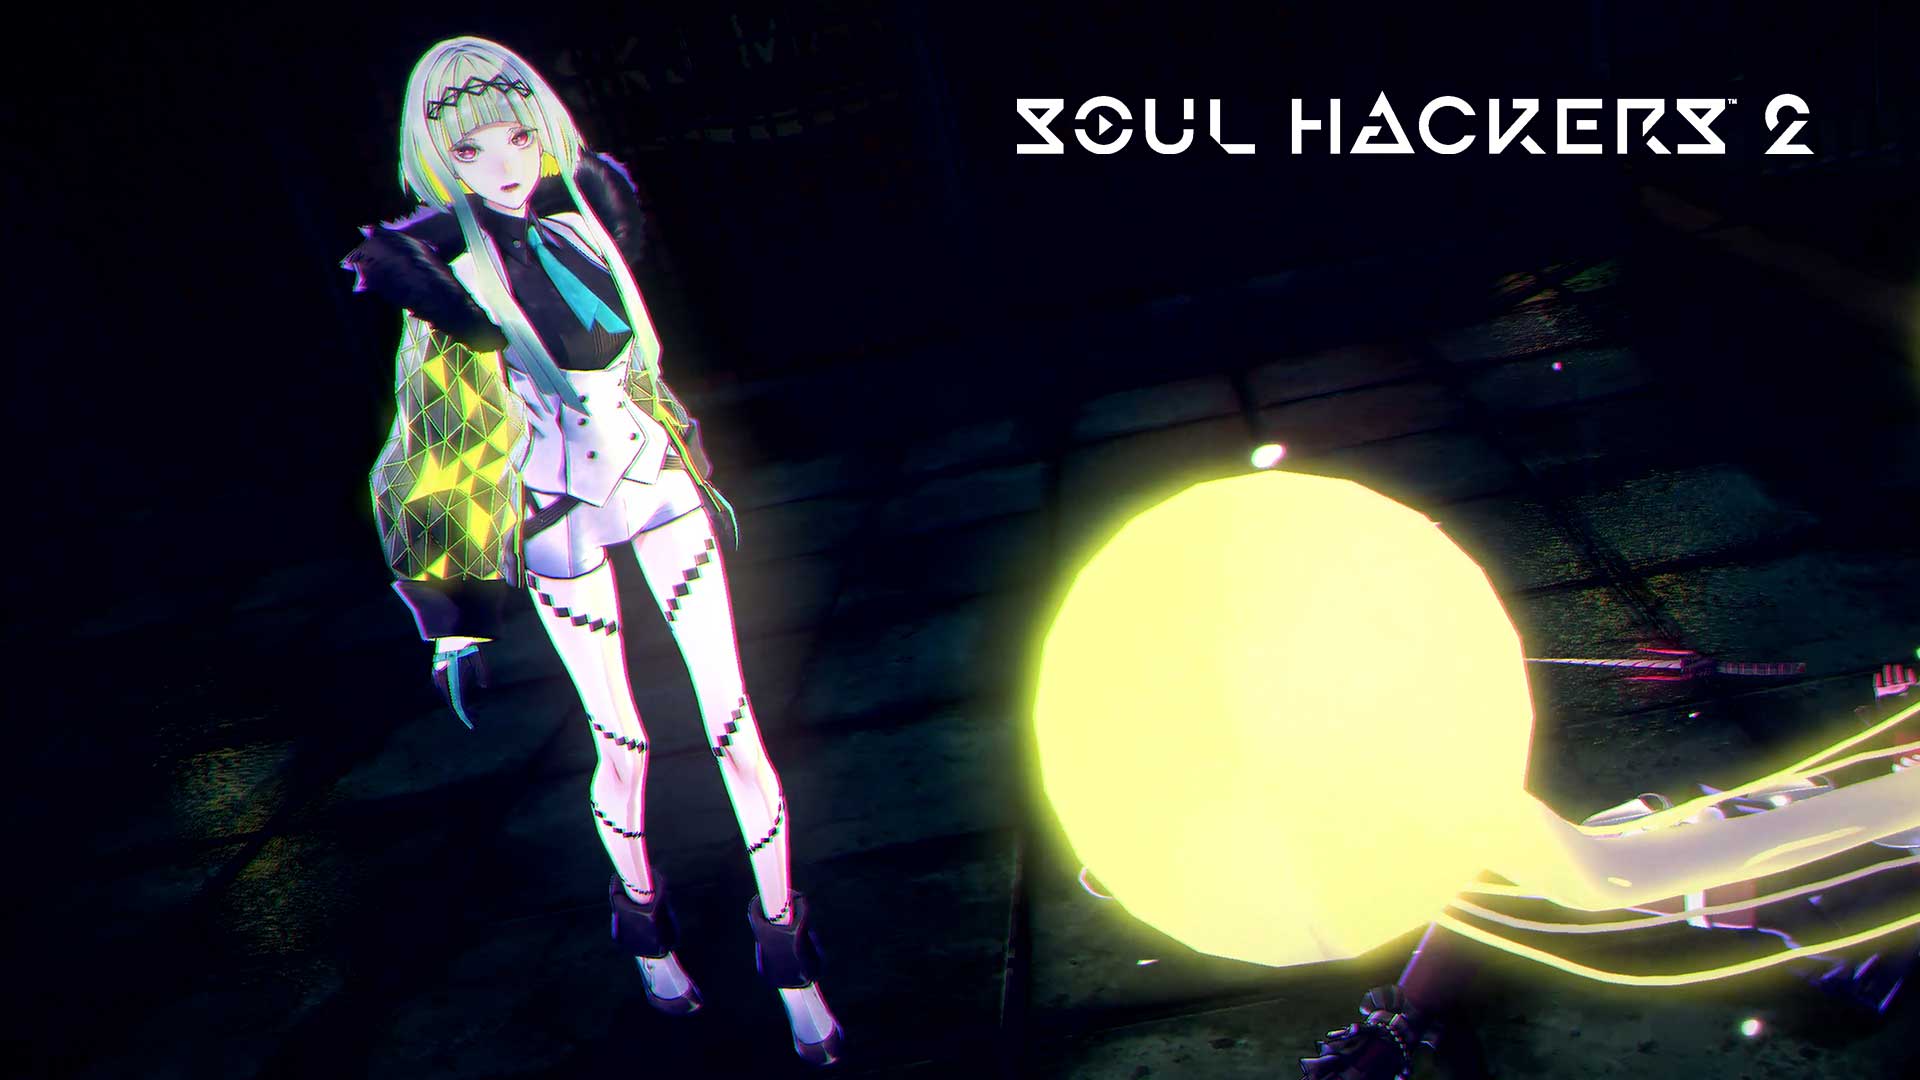 Soul Hackers 2 Hacks In On August 26